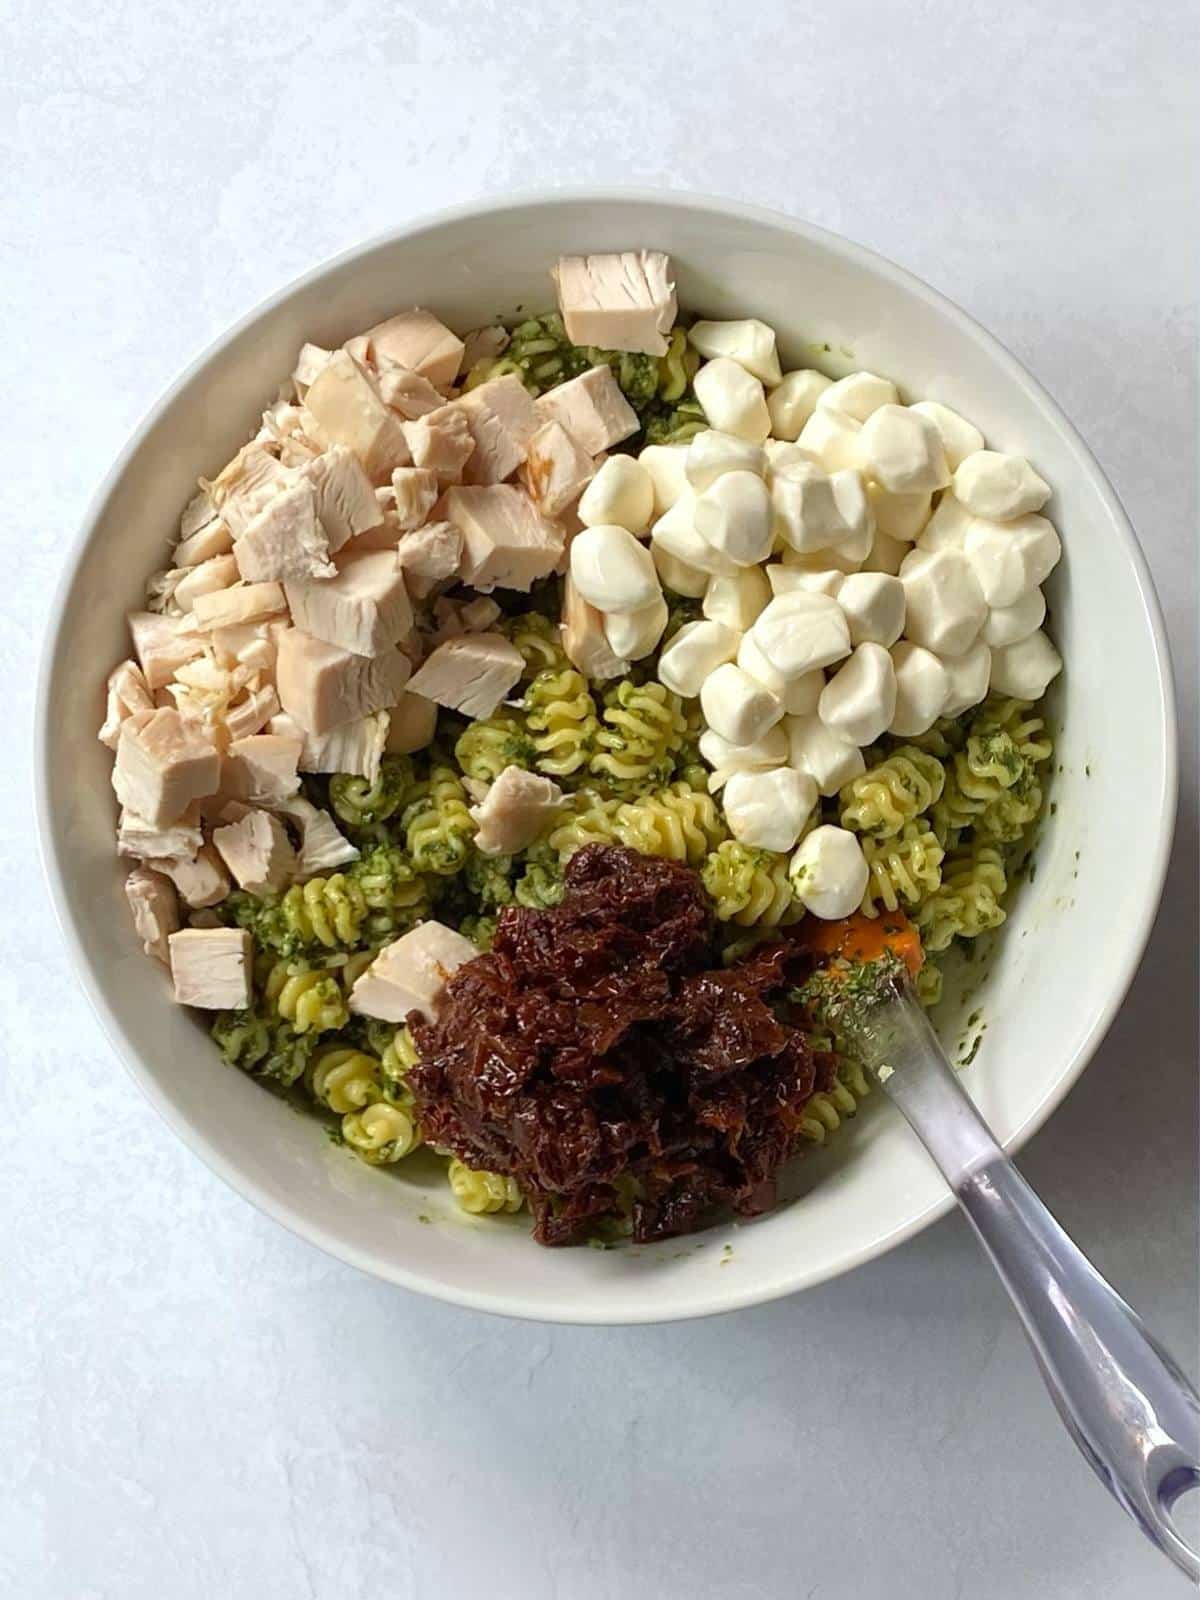 Chicken pesto pasta salad ingredients added to a bowl.